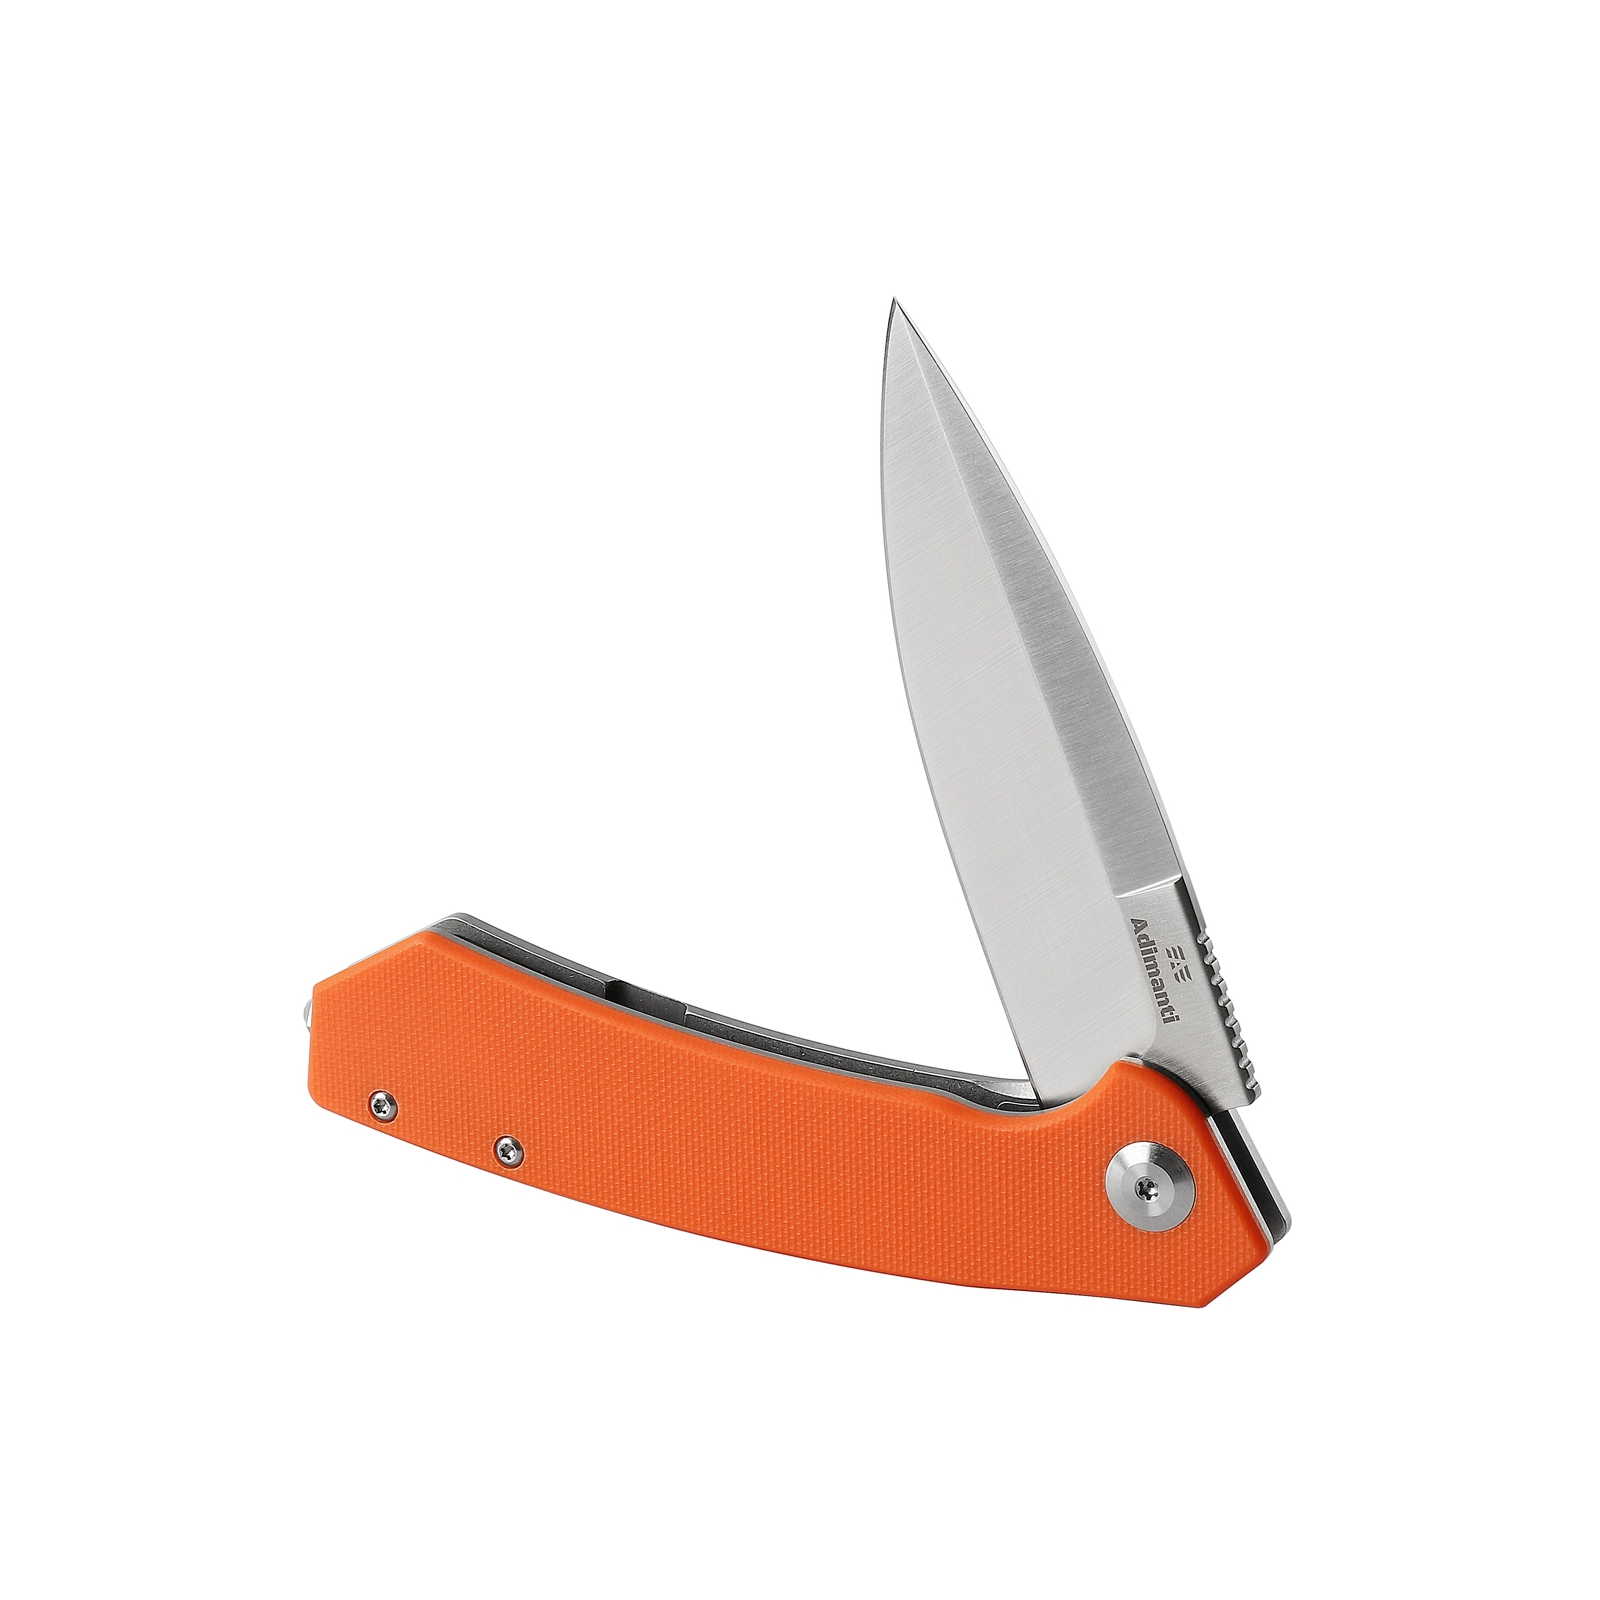 Нож Adimanti by Ganzo (Skimen design) Camouflage (Skimen-CA) изображение 3